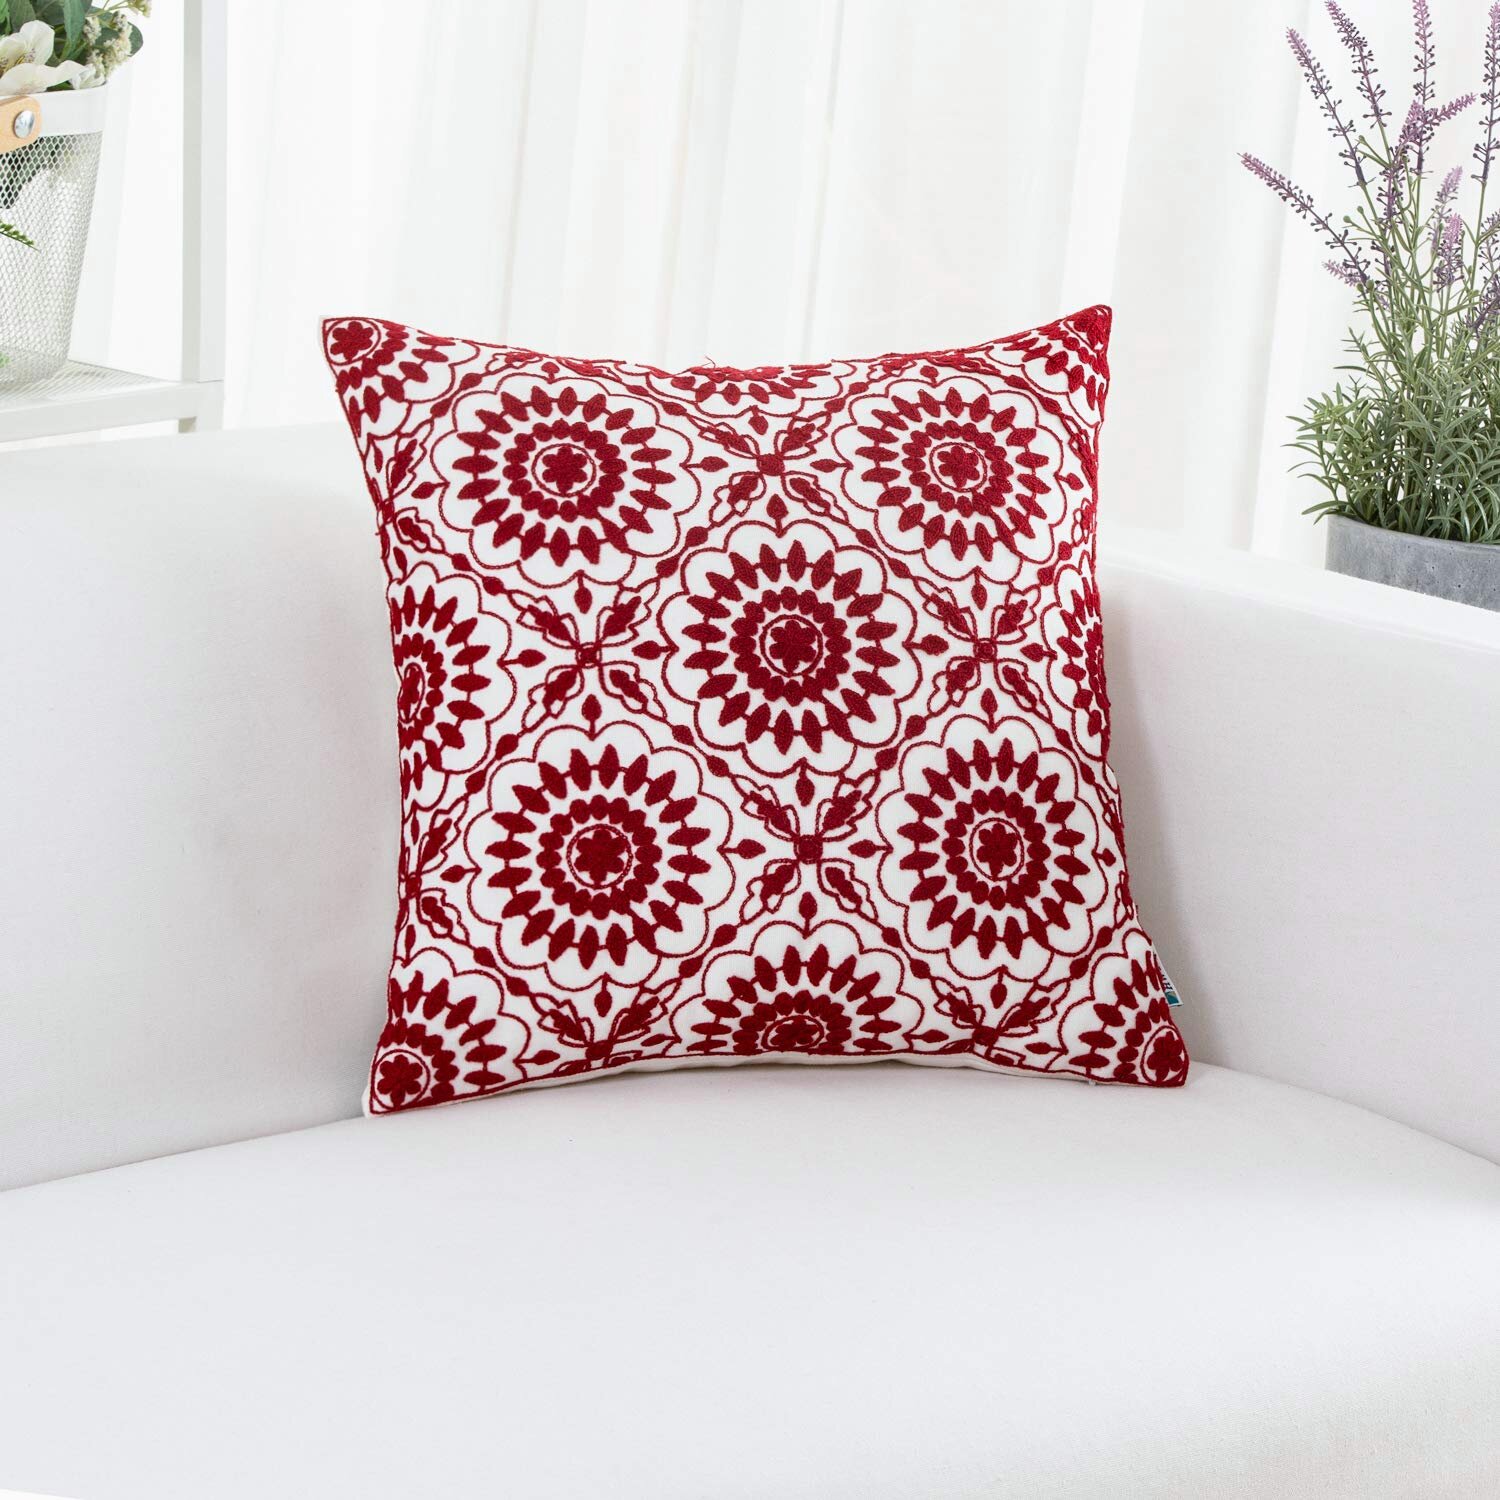 oFloral Sunflower Pillowcases Decorative Pillow Cases Standard Size 18x18 Inch Cotton Linen Pillow Cushion Cover 